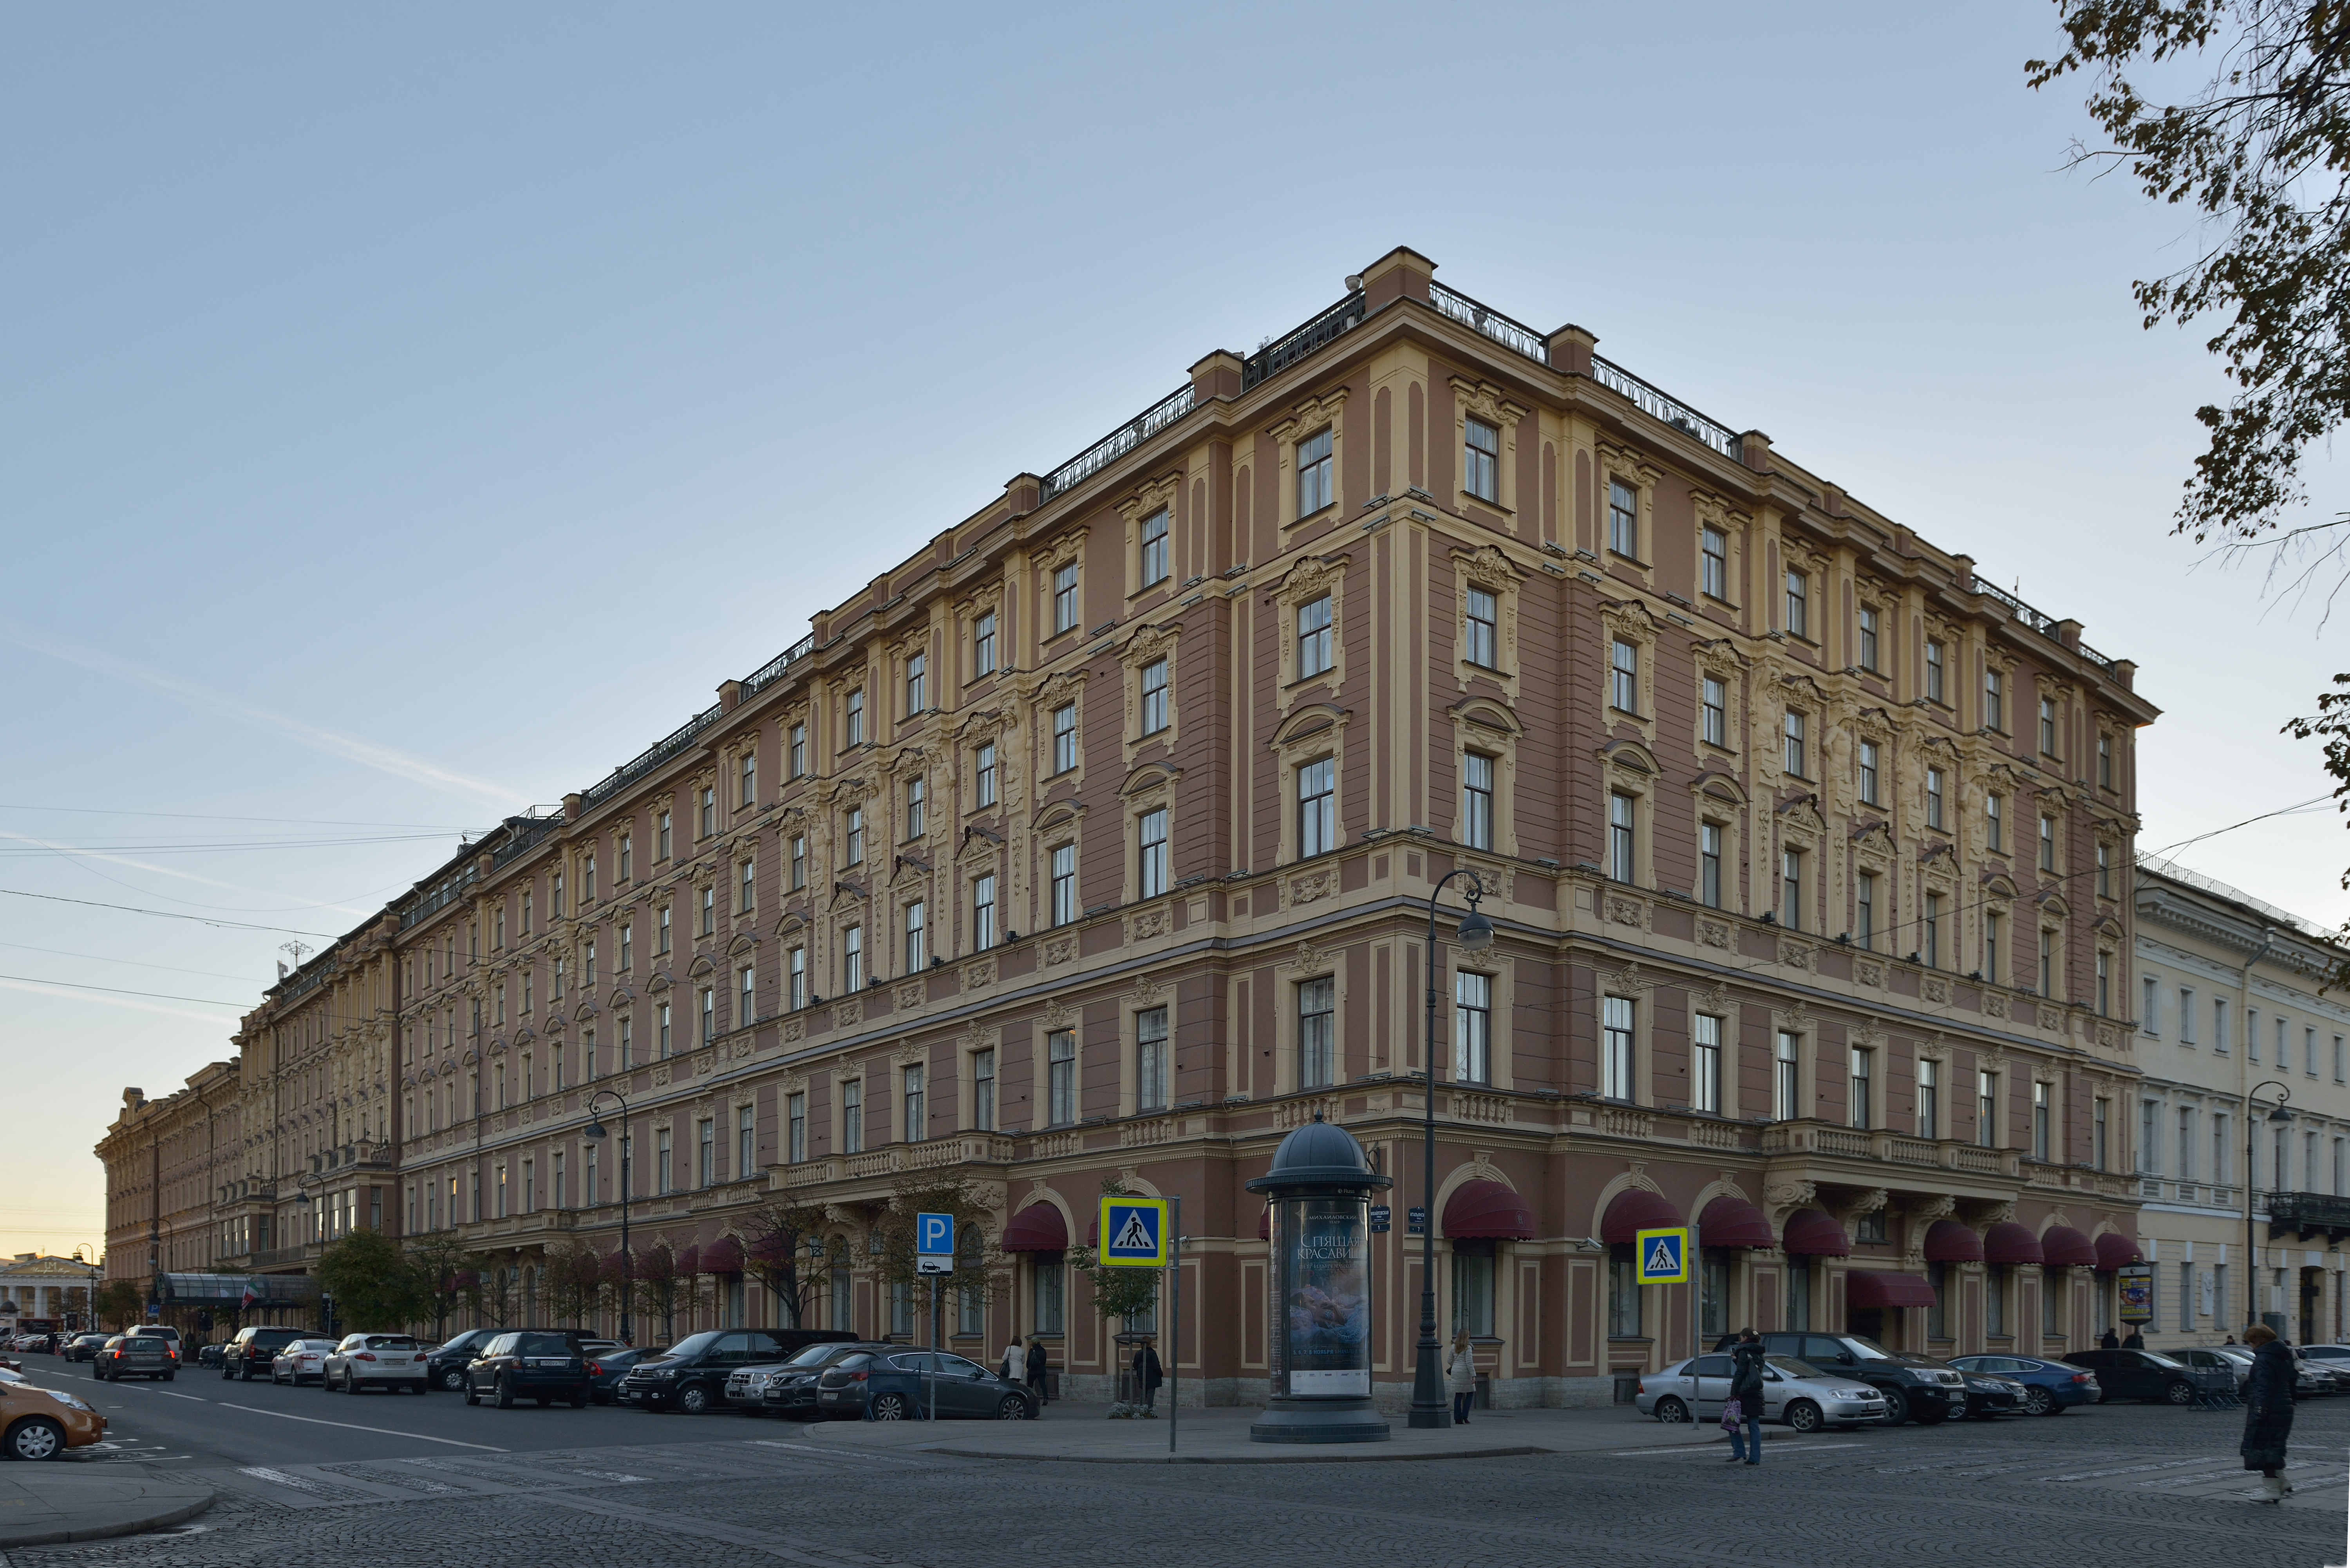 Belmond Grand Hotel Europe, St Petersburg, Russia